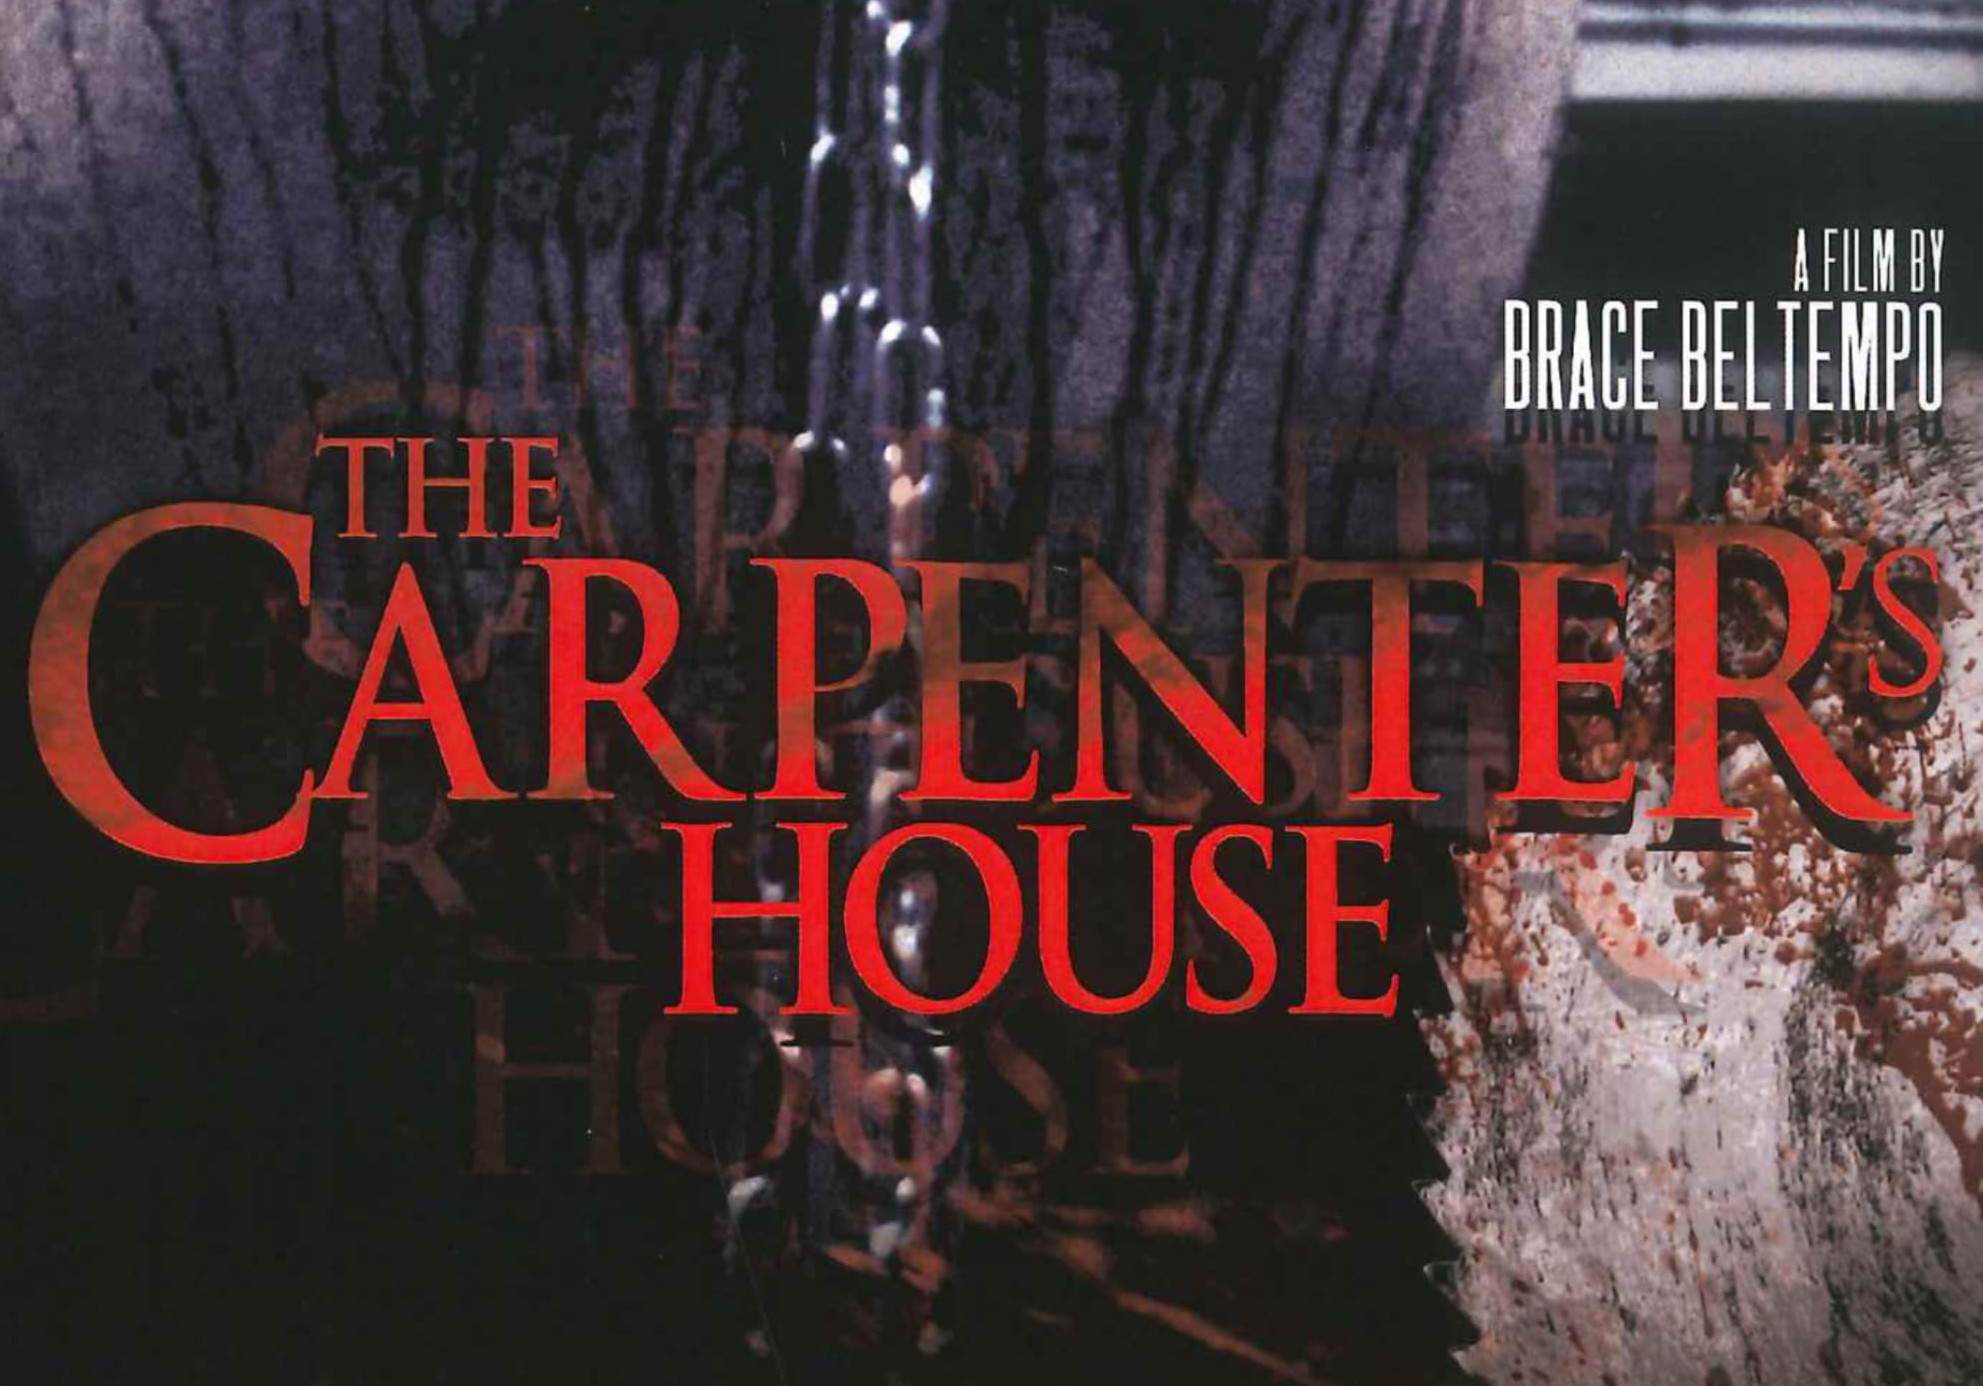 The Carpenter’s House